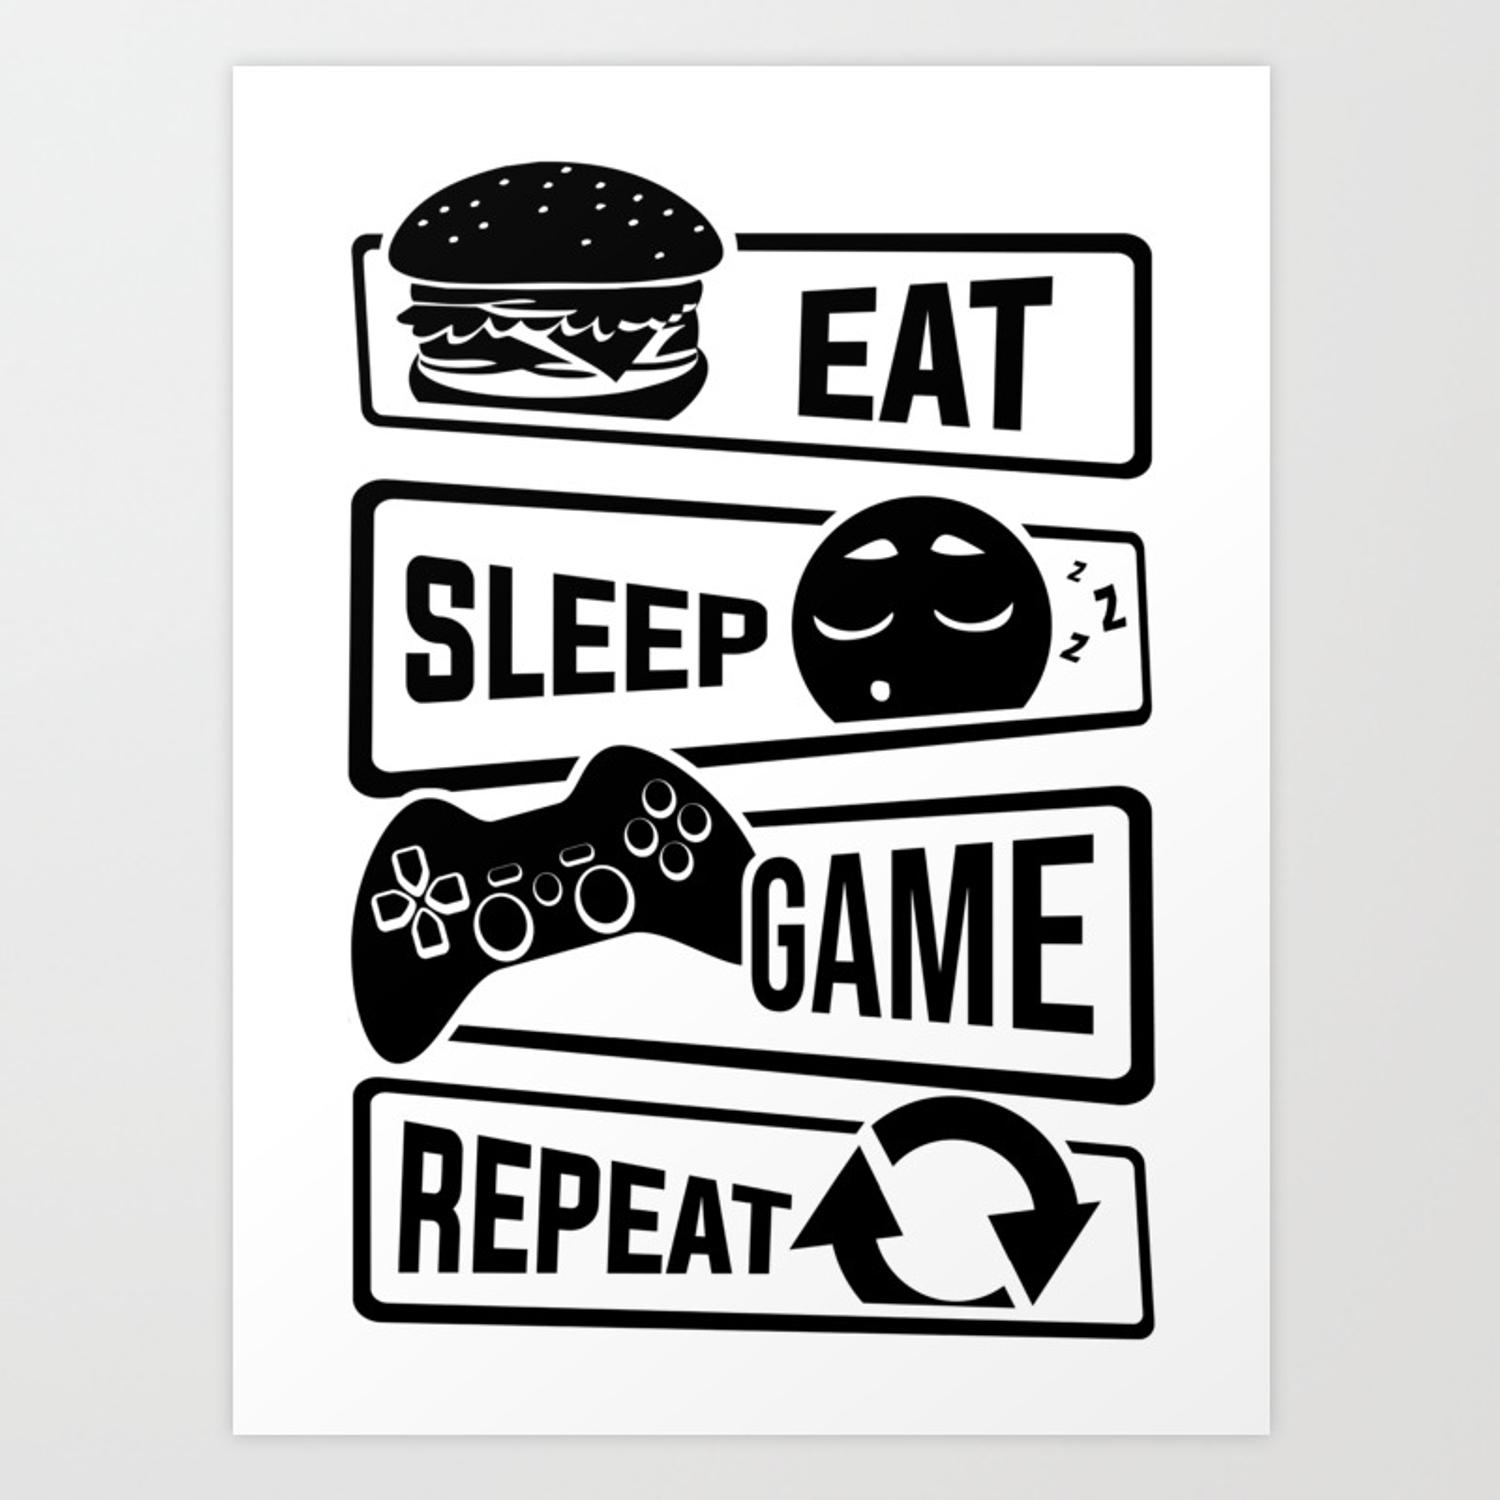 Eat sleep game repeat wallpapers